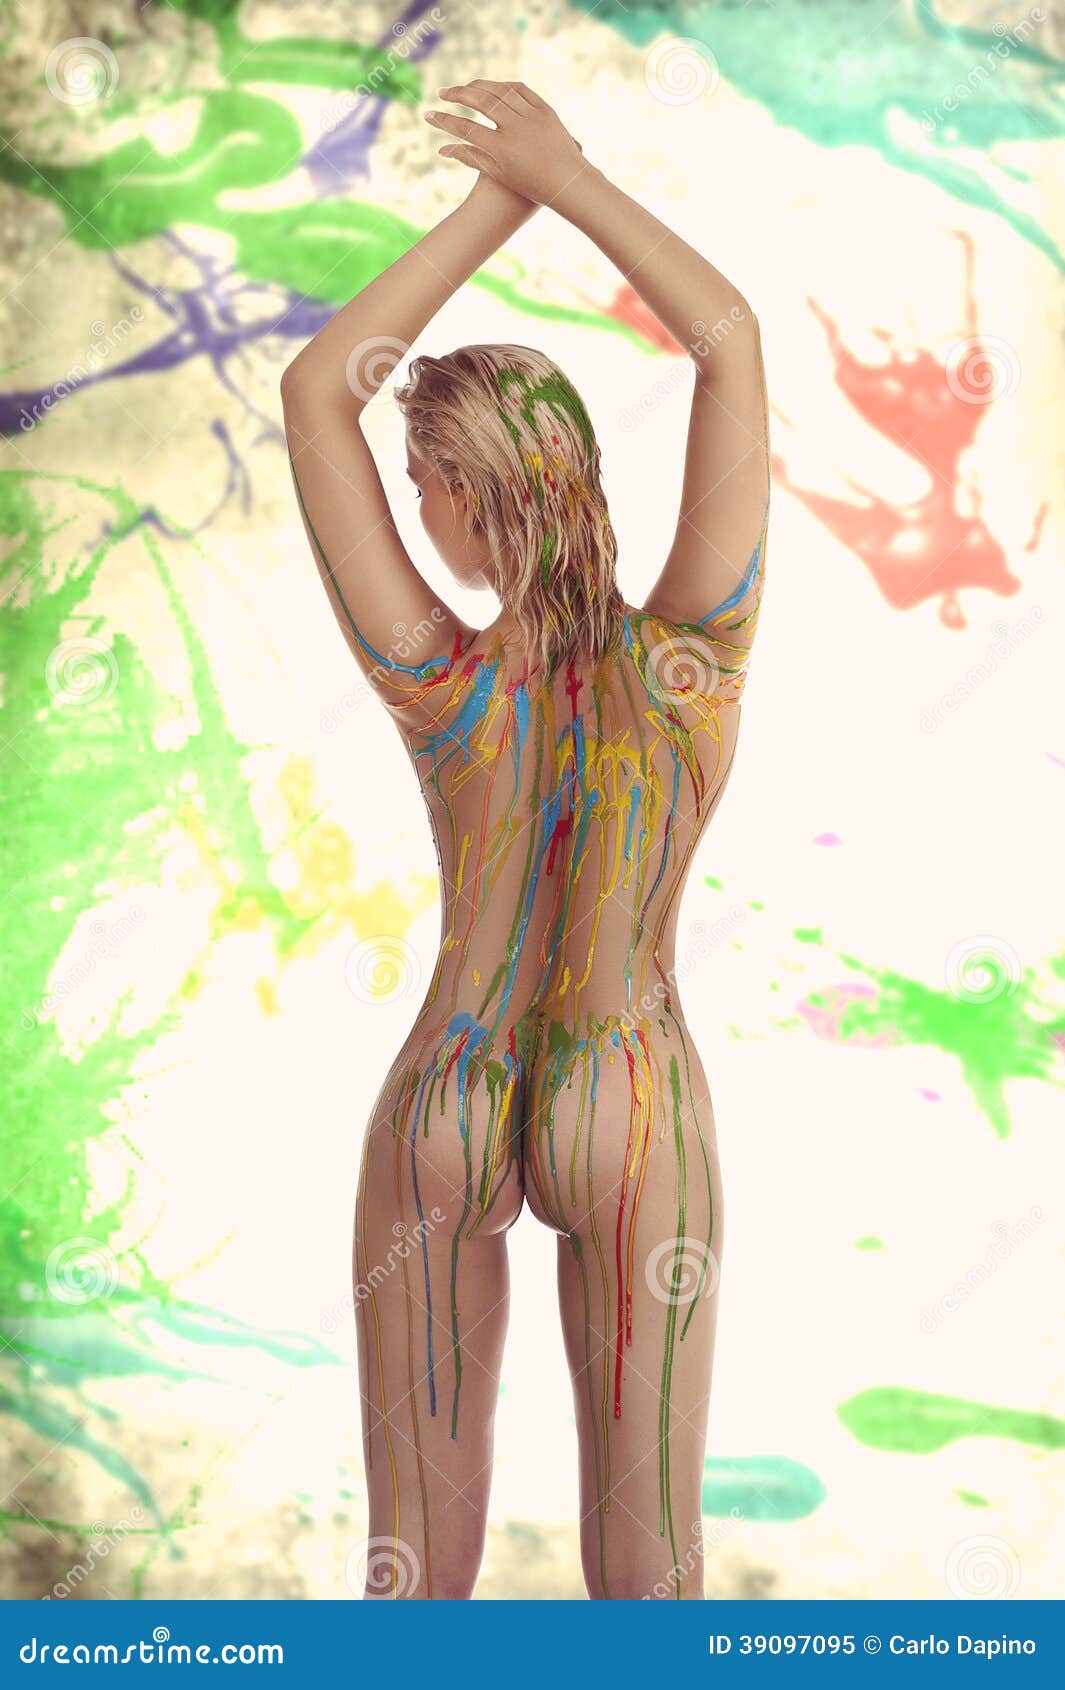 body painting nude women